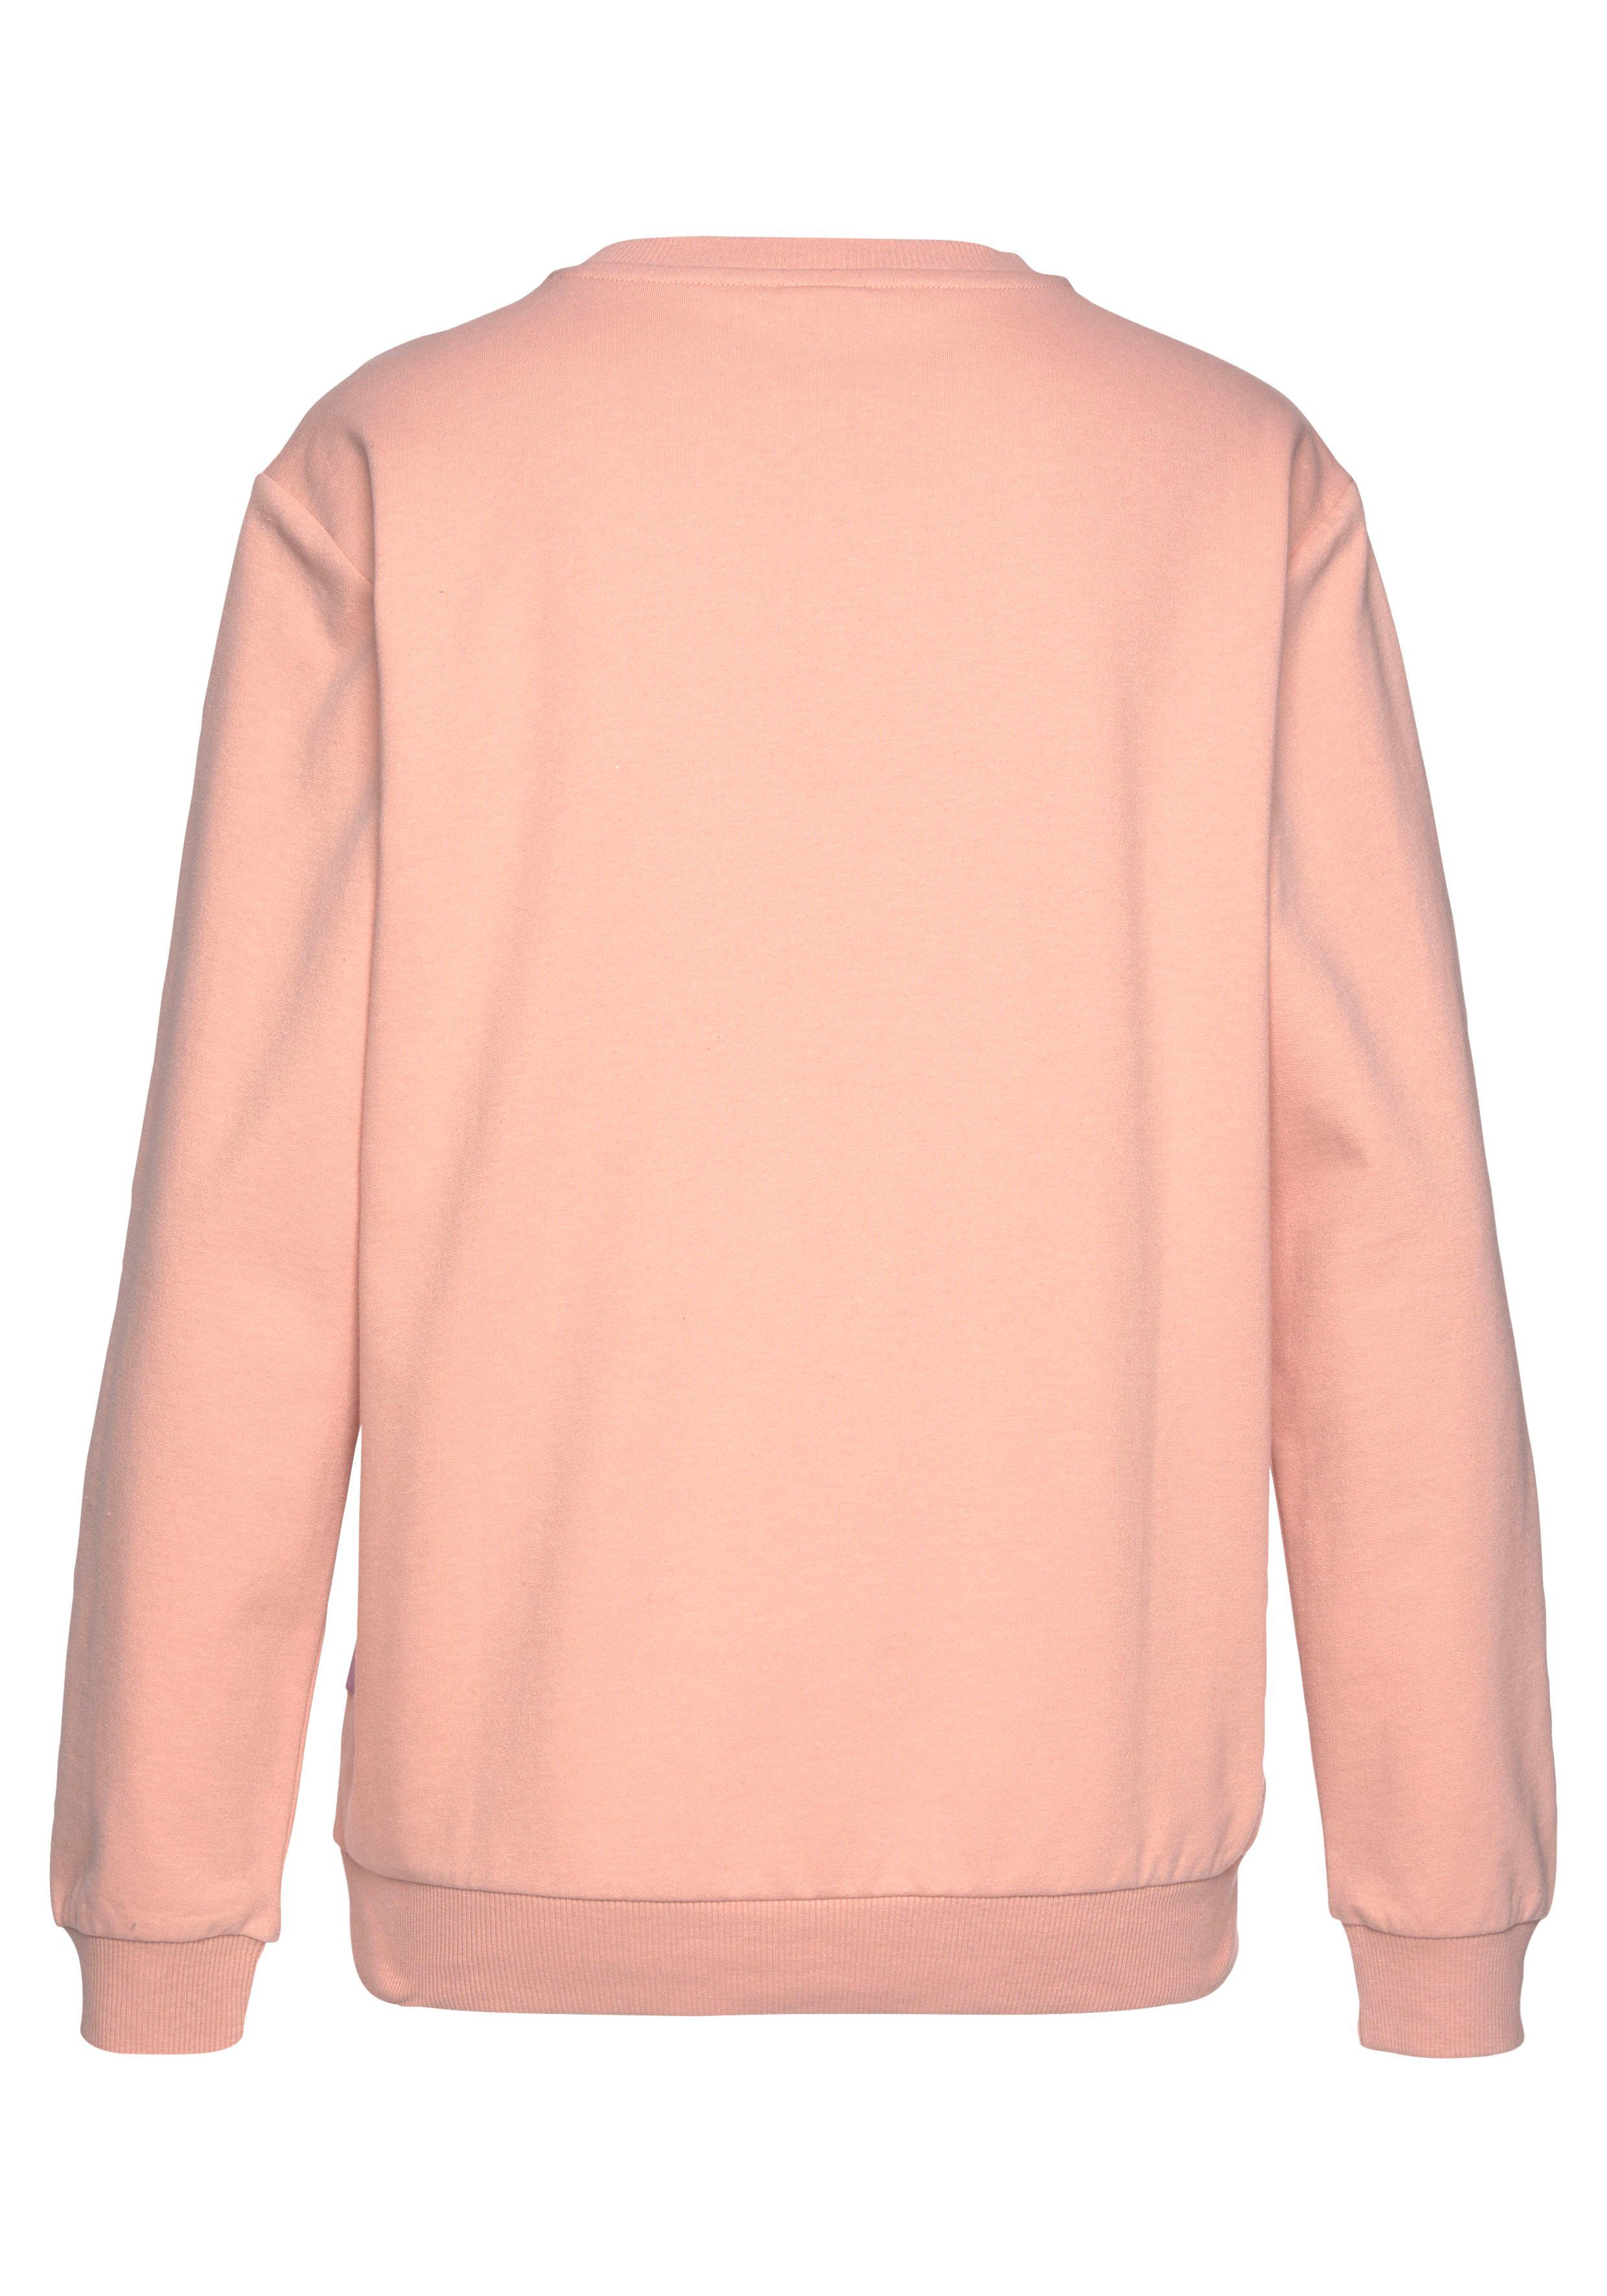 Loungeanzug Sweatshirt apricot-roségoldfarben LASCANA